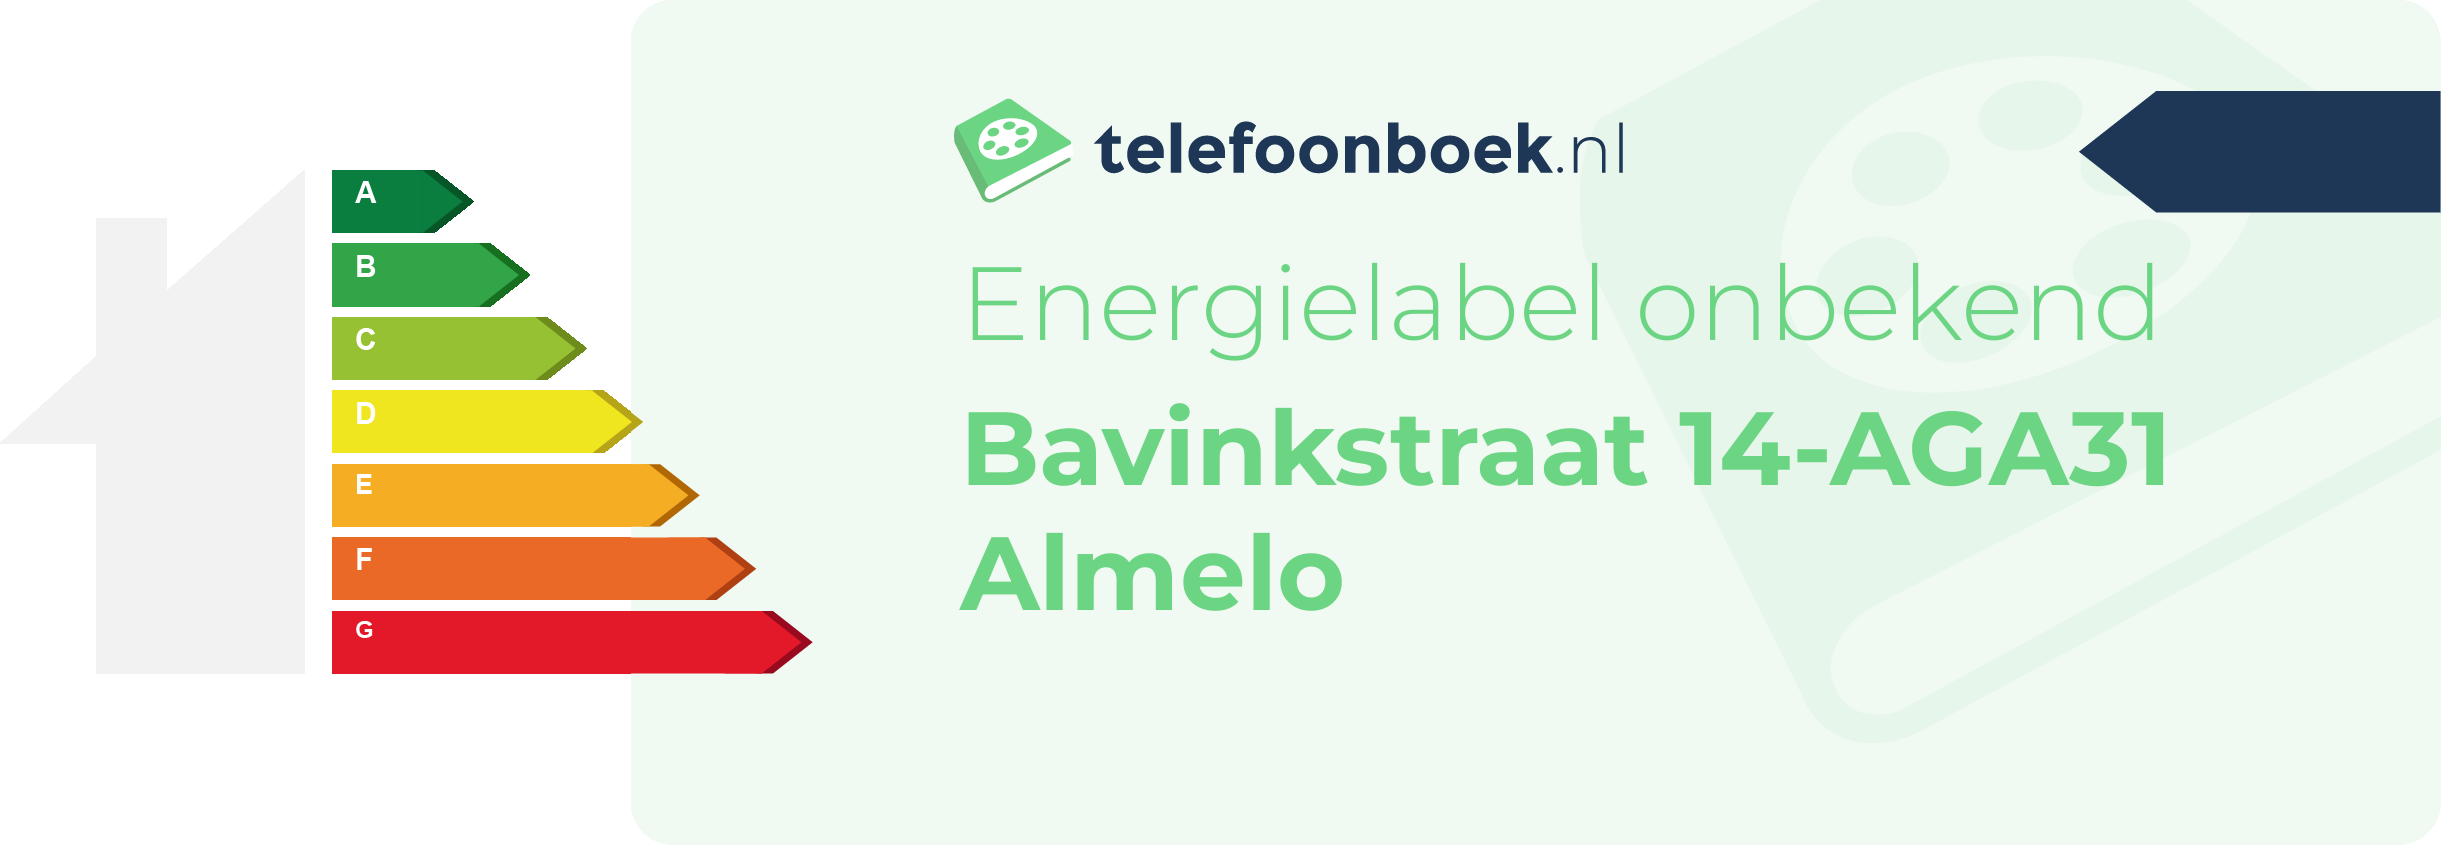 Energielabel Bavinkstraat 14-AGA31 Almelo